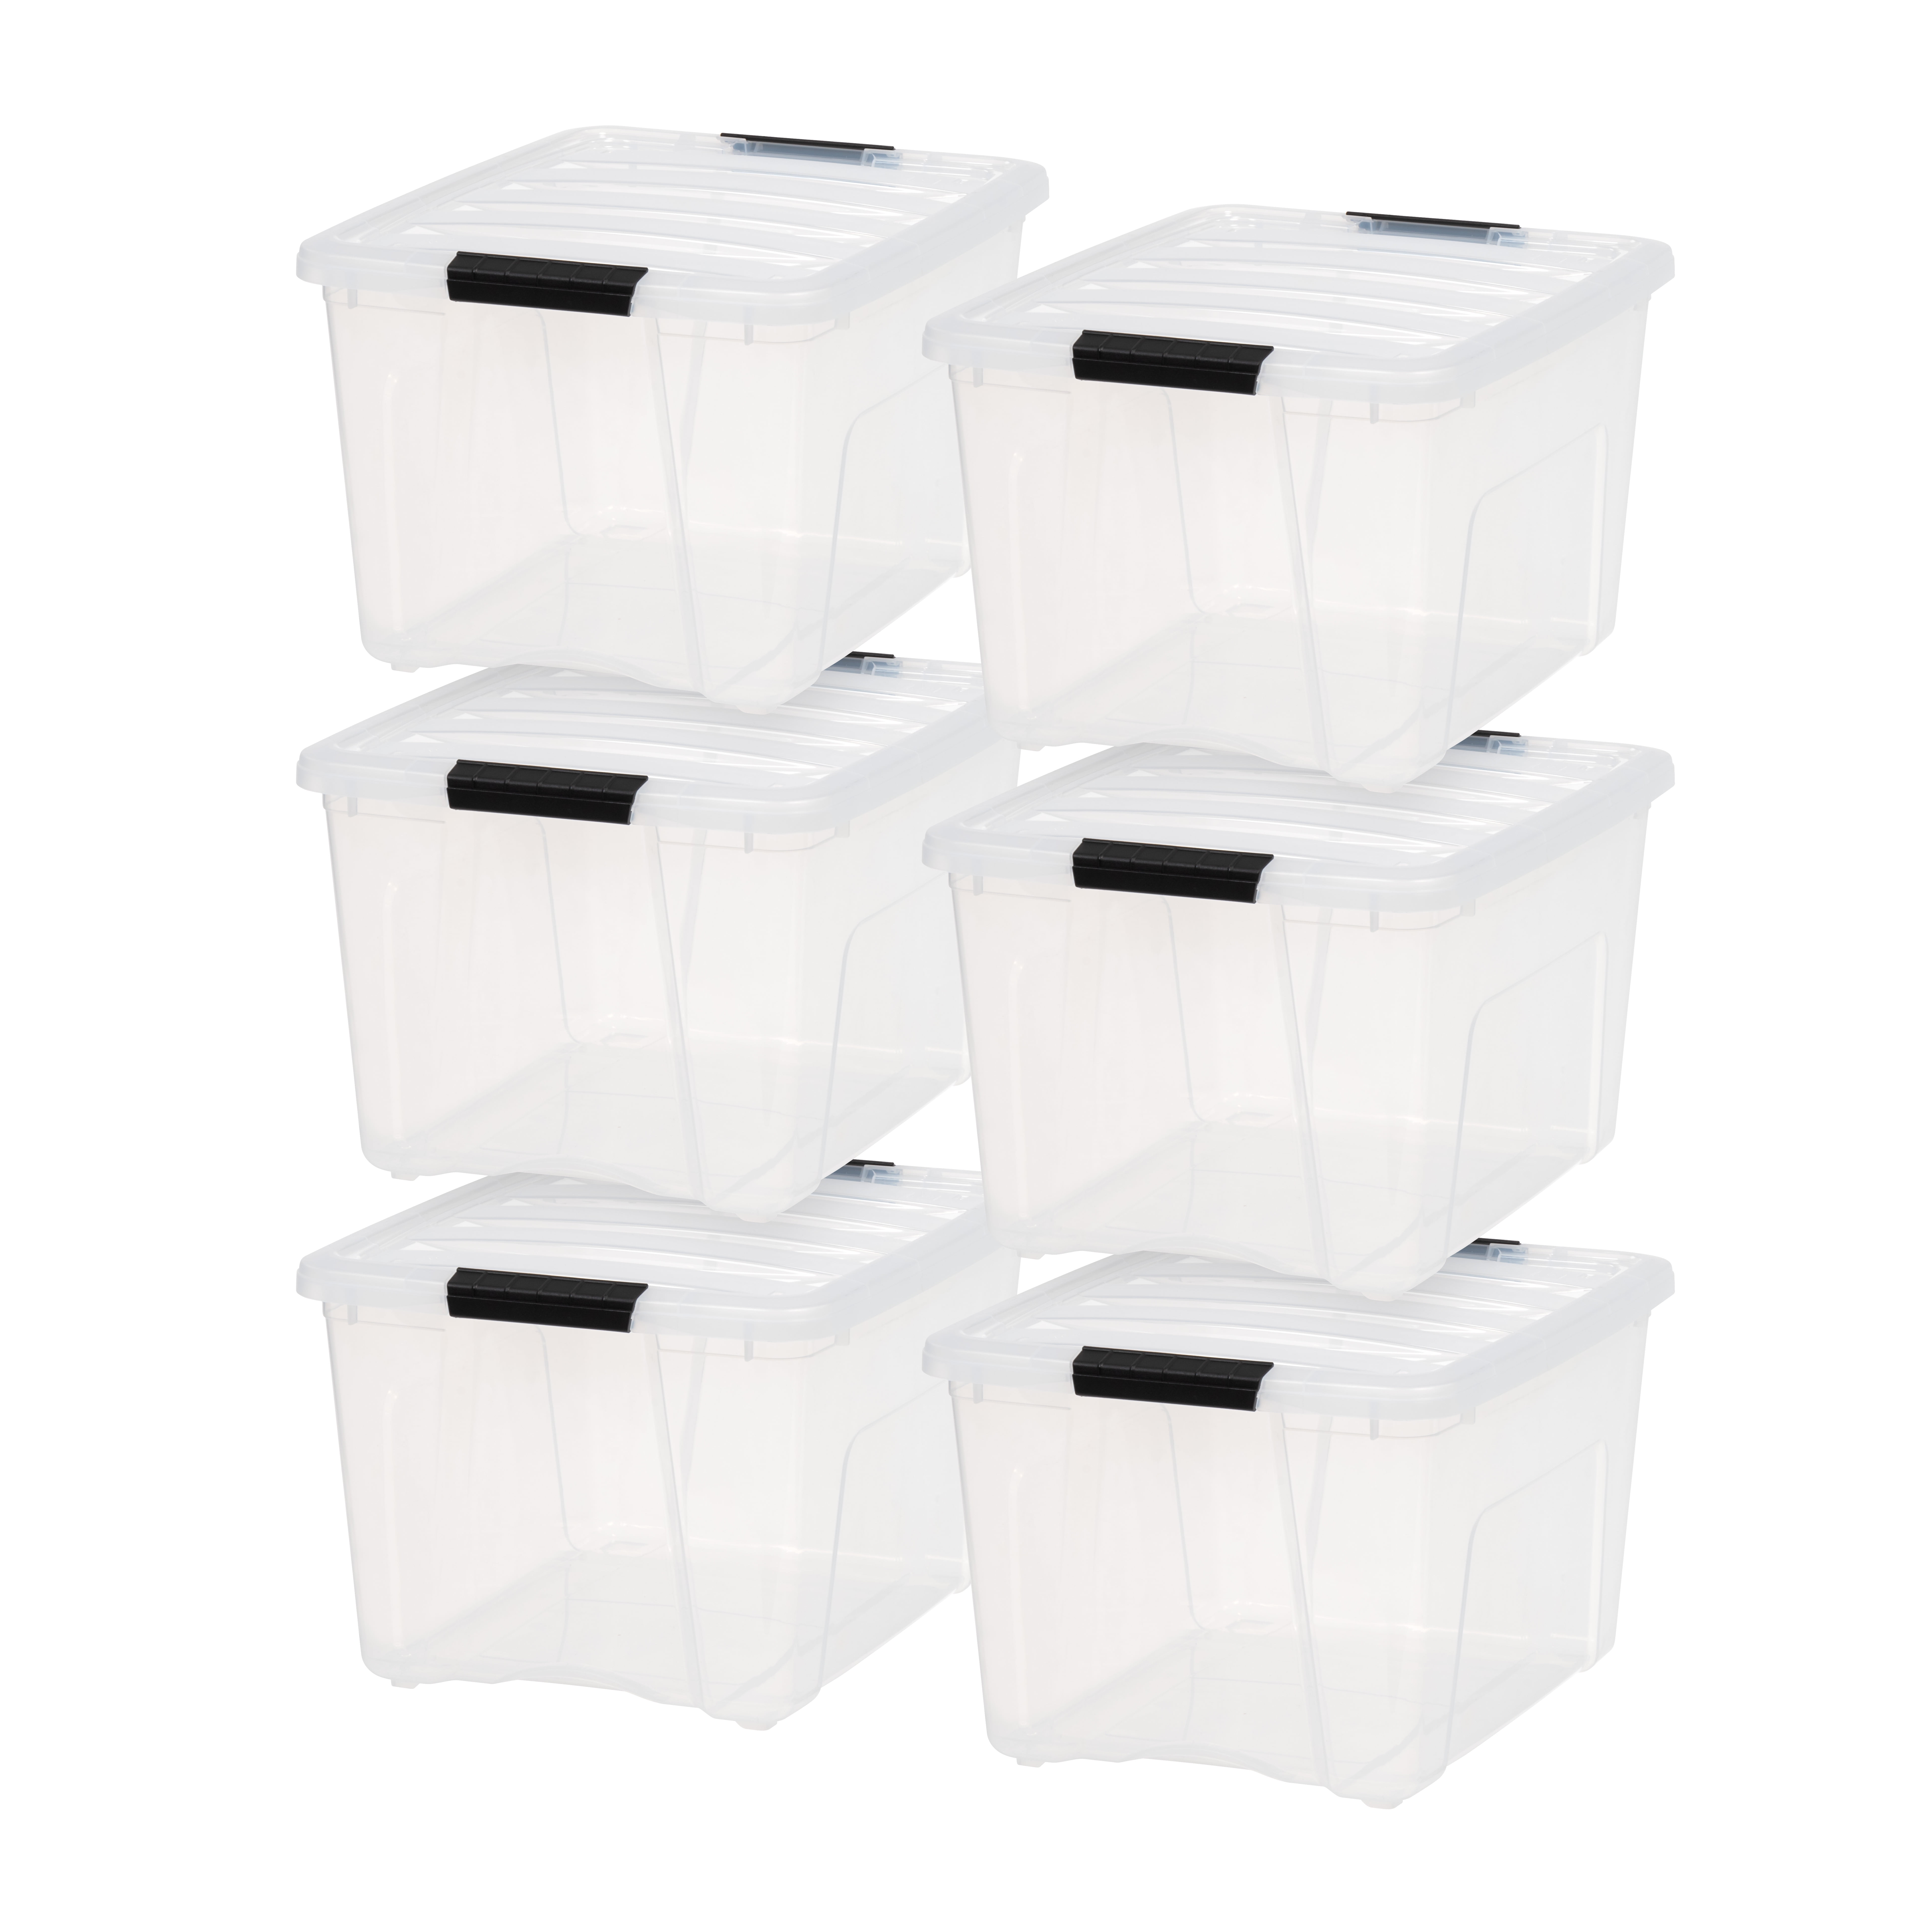 IRIS USA 10 Gallon Plastic Storage Boxes, Clear, 6 Count